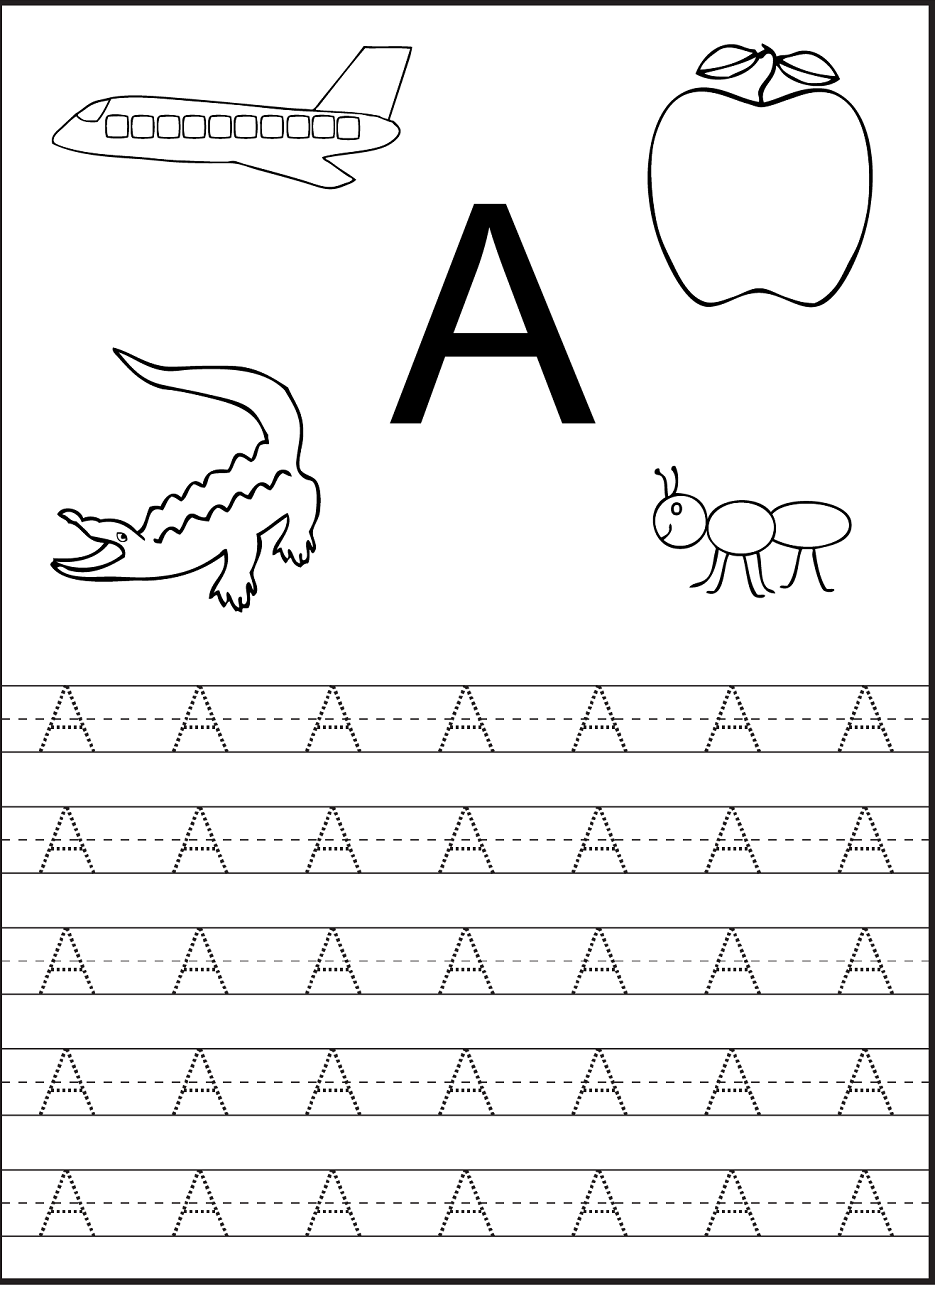 Worksheet ~ Freeschool Worksheets Alphabet Printables within Alphabet Worksheets Preschool